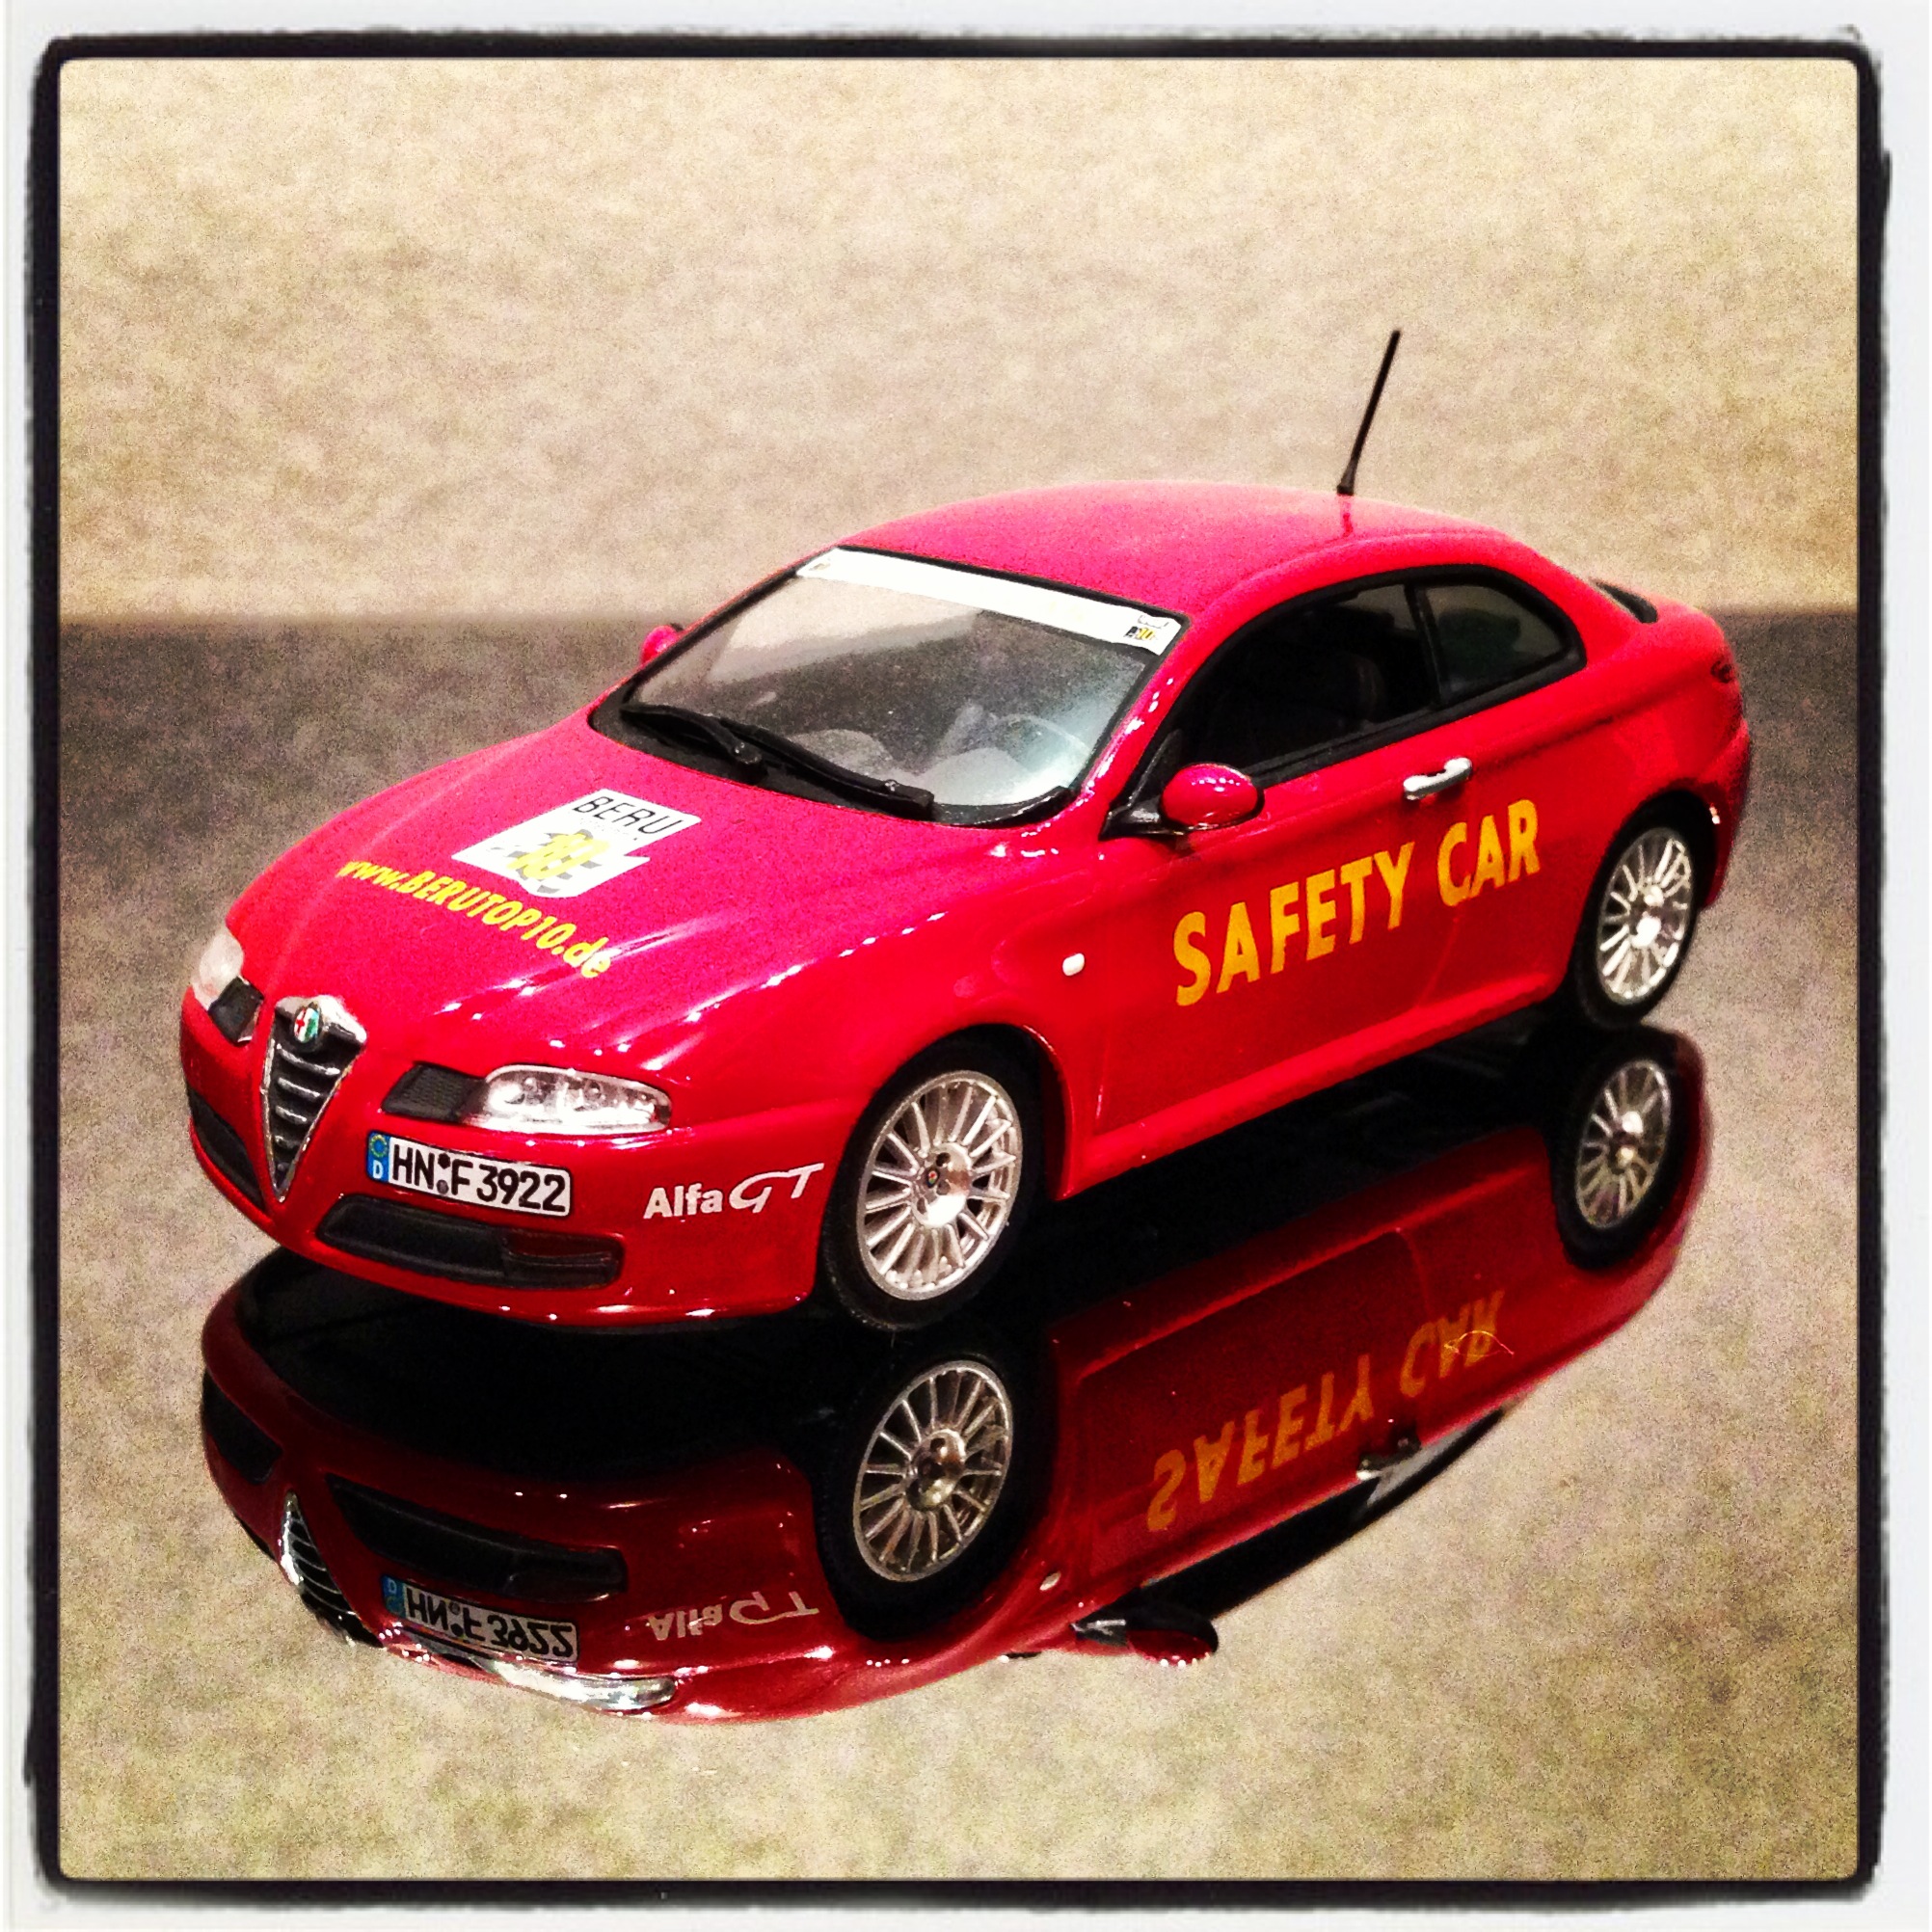 Alfa Romeo GT, BERU Top Ten Safety Car, le 1 of 1,344pcs. (minichamps)